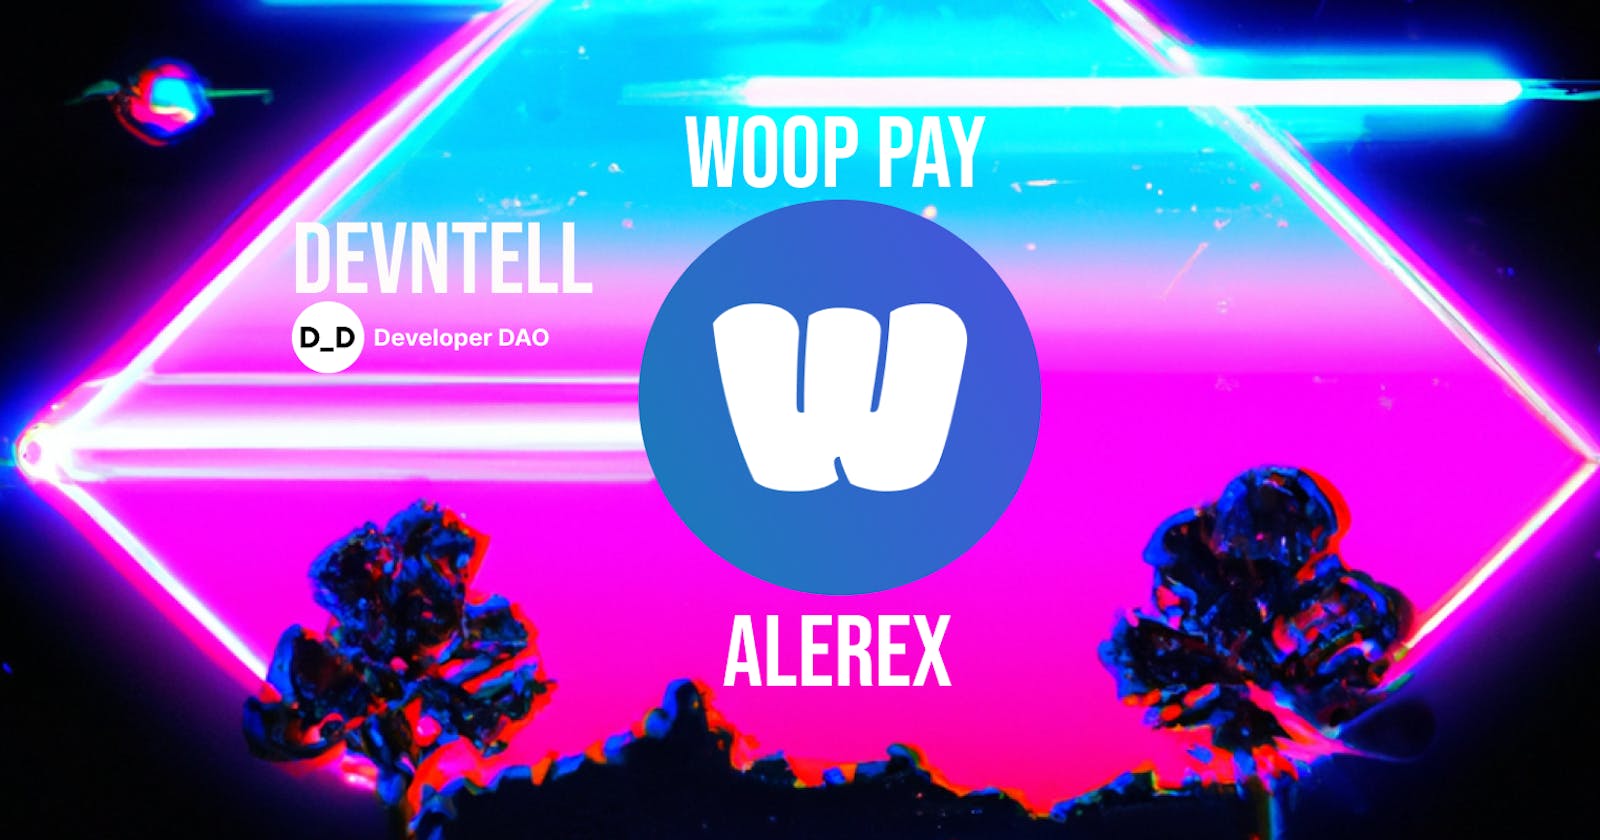 DevNTell - Woop Pay